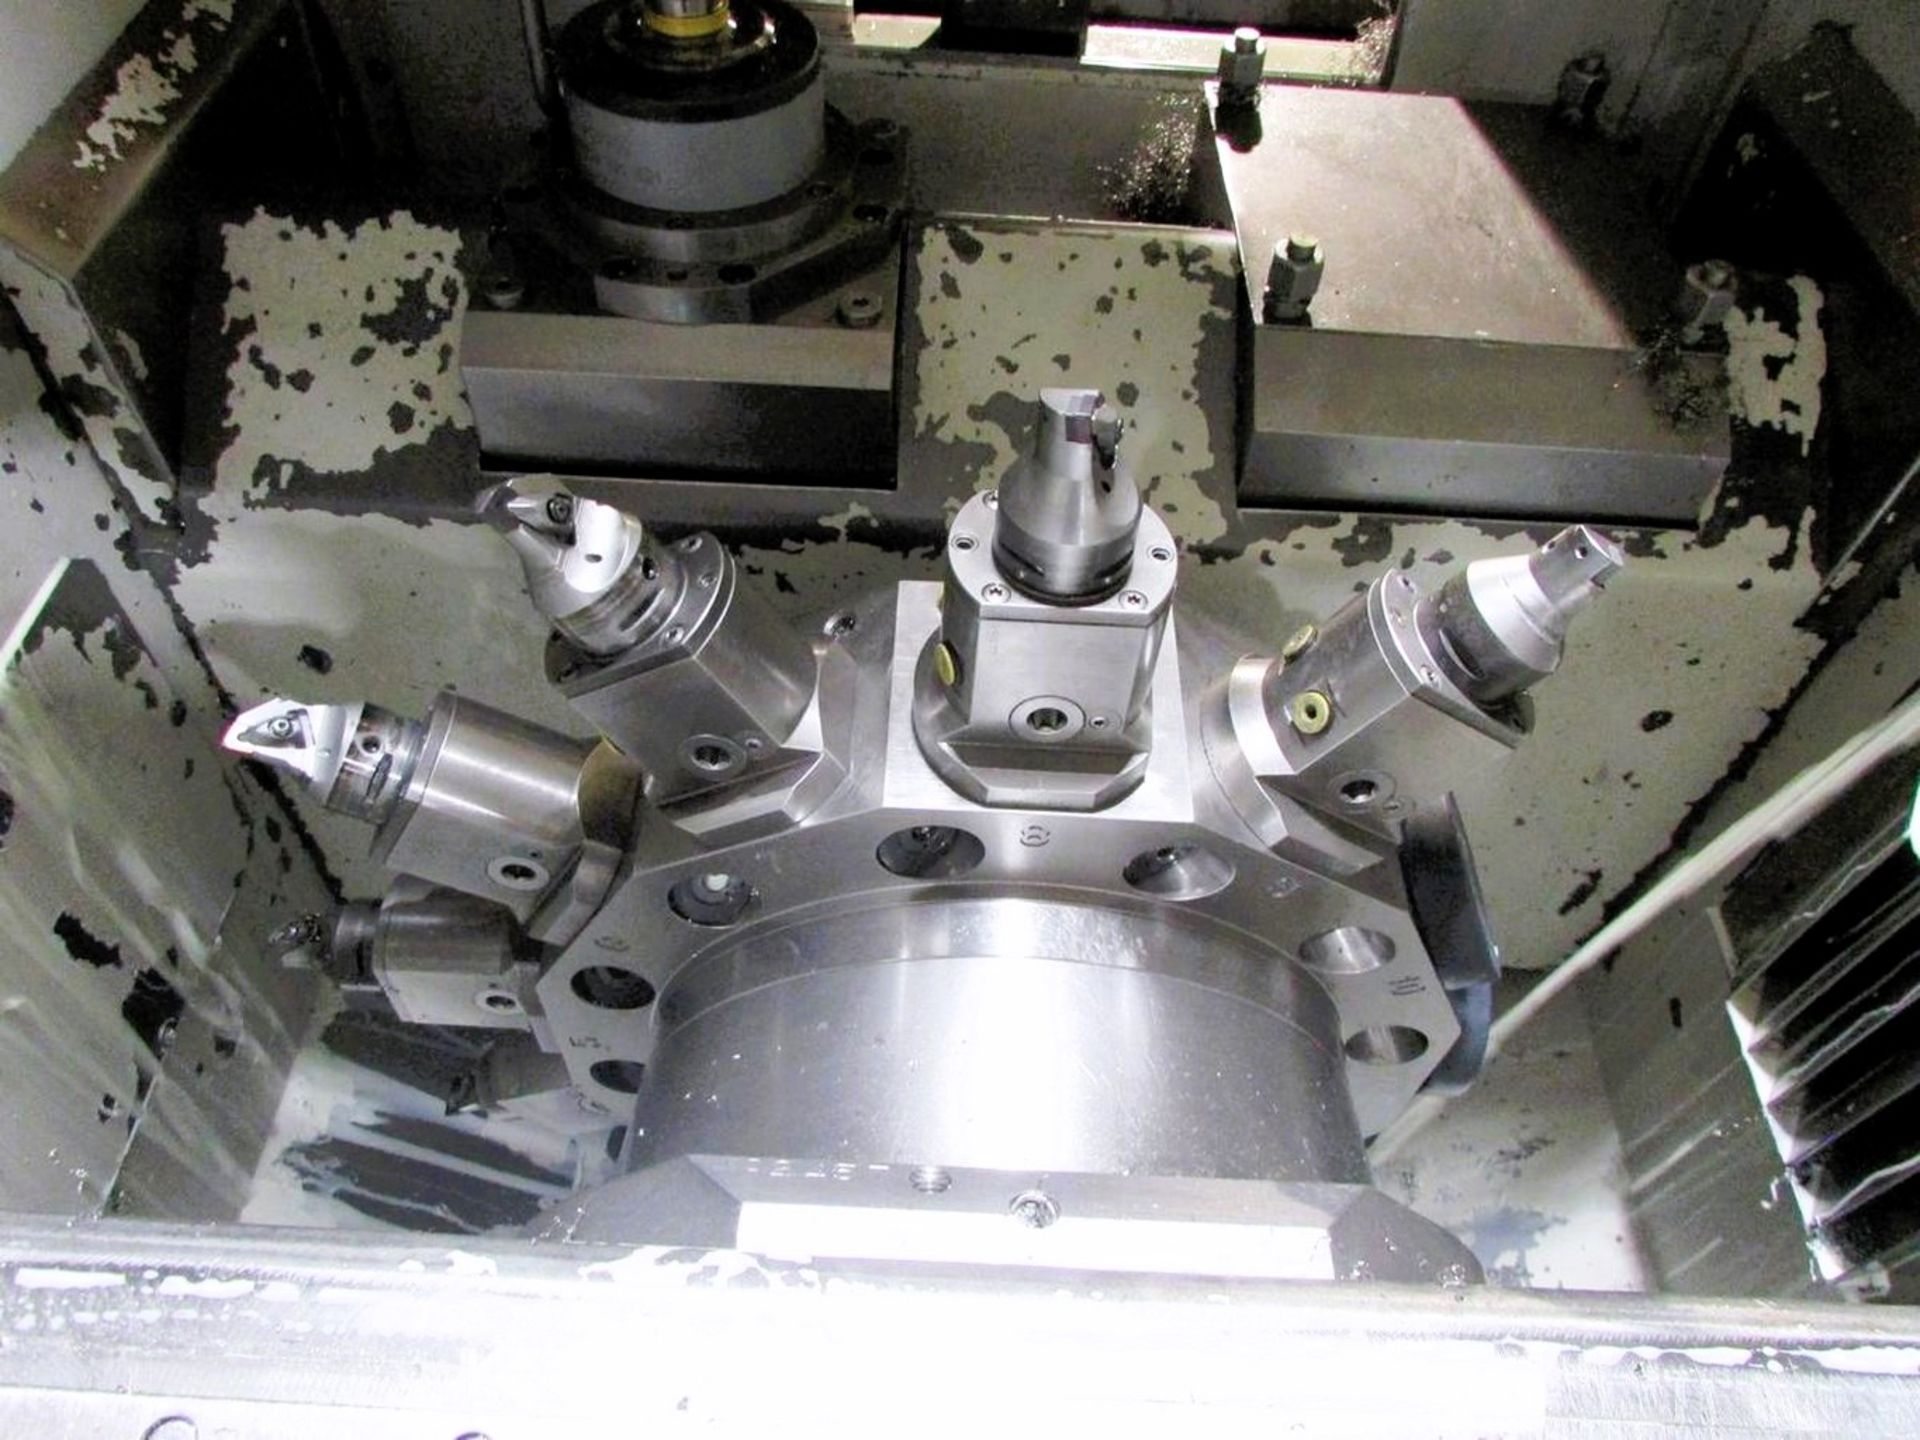 Emag Reinecker VSC-250-DDS CNC Vertical Hard Turning and Finish Grinding Machine, M762.56845 - Bild 7 aus 11